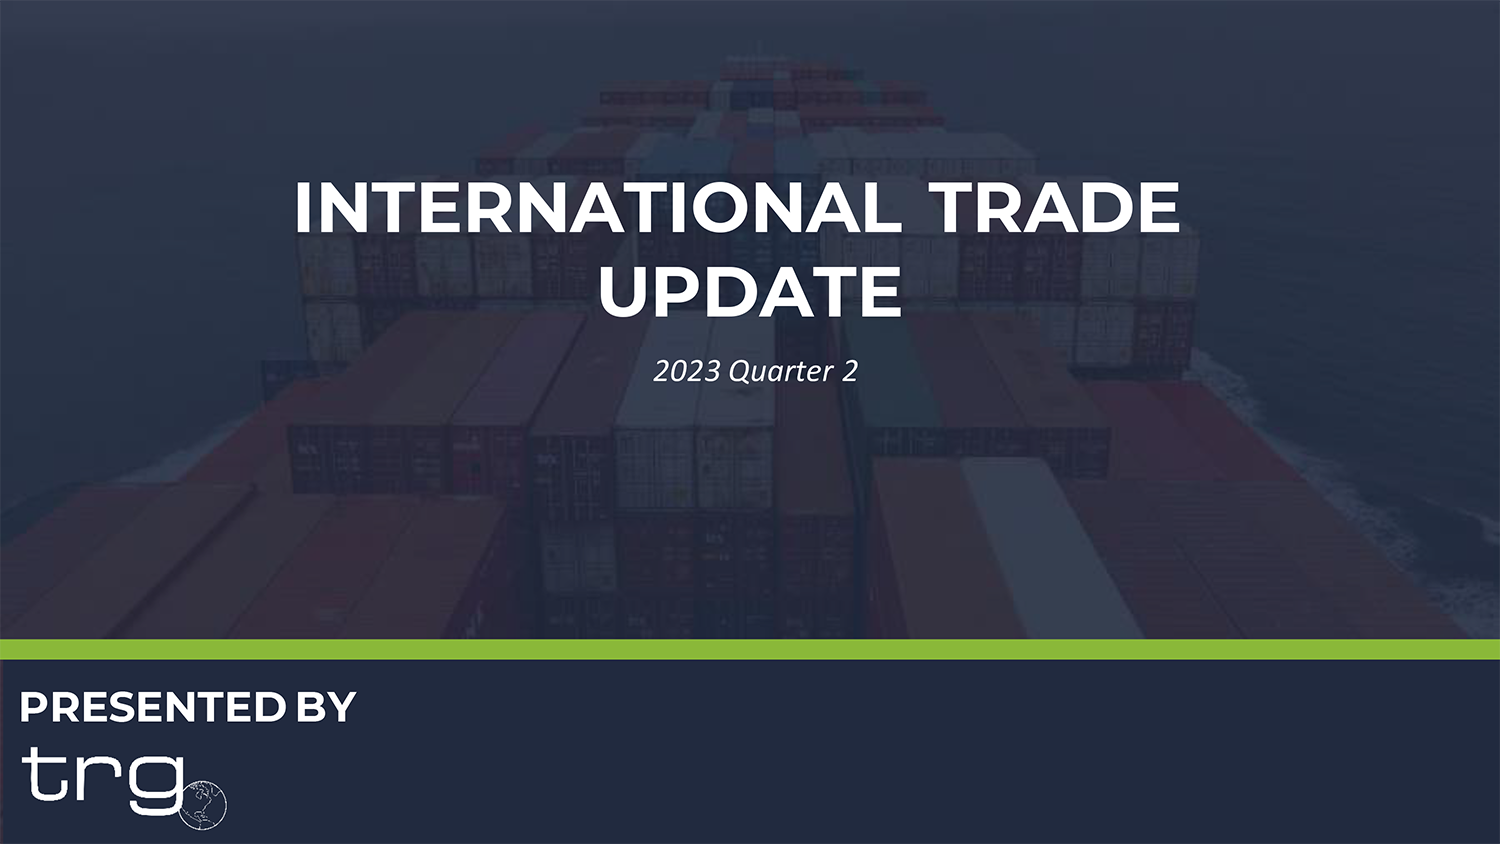 Trade Risk Guaranty hosts a webinar discussing a 2023 Q2 international trade update.